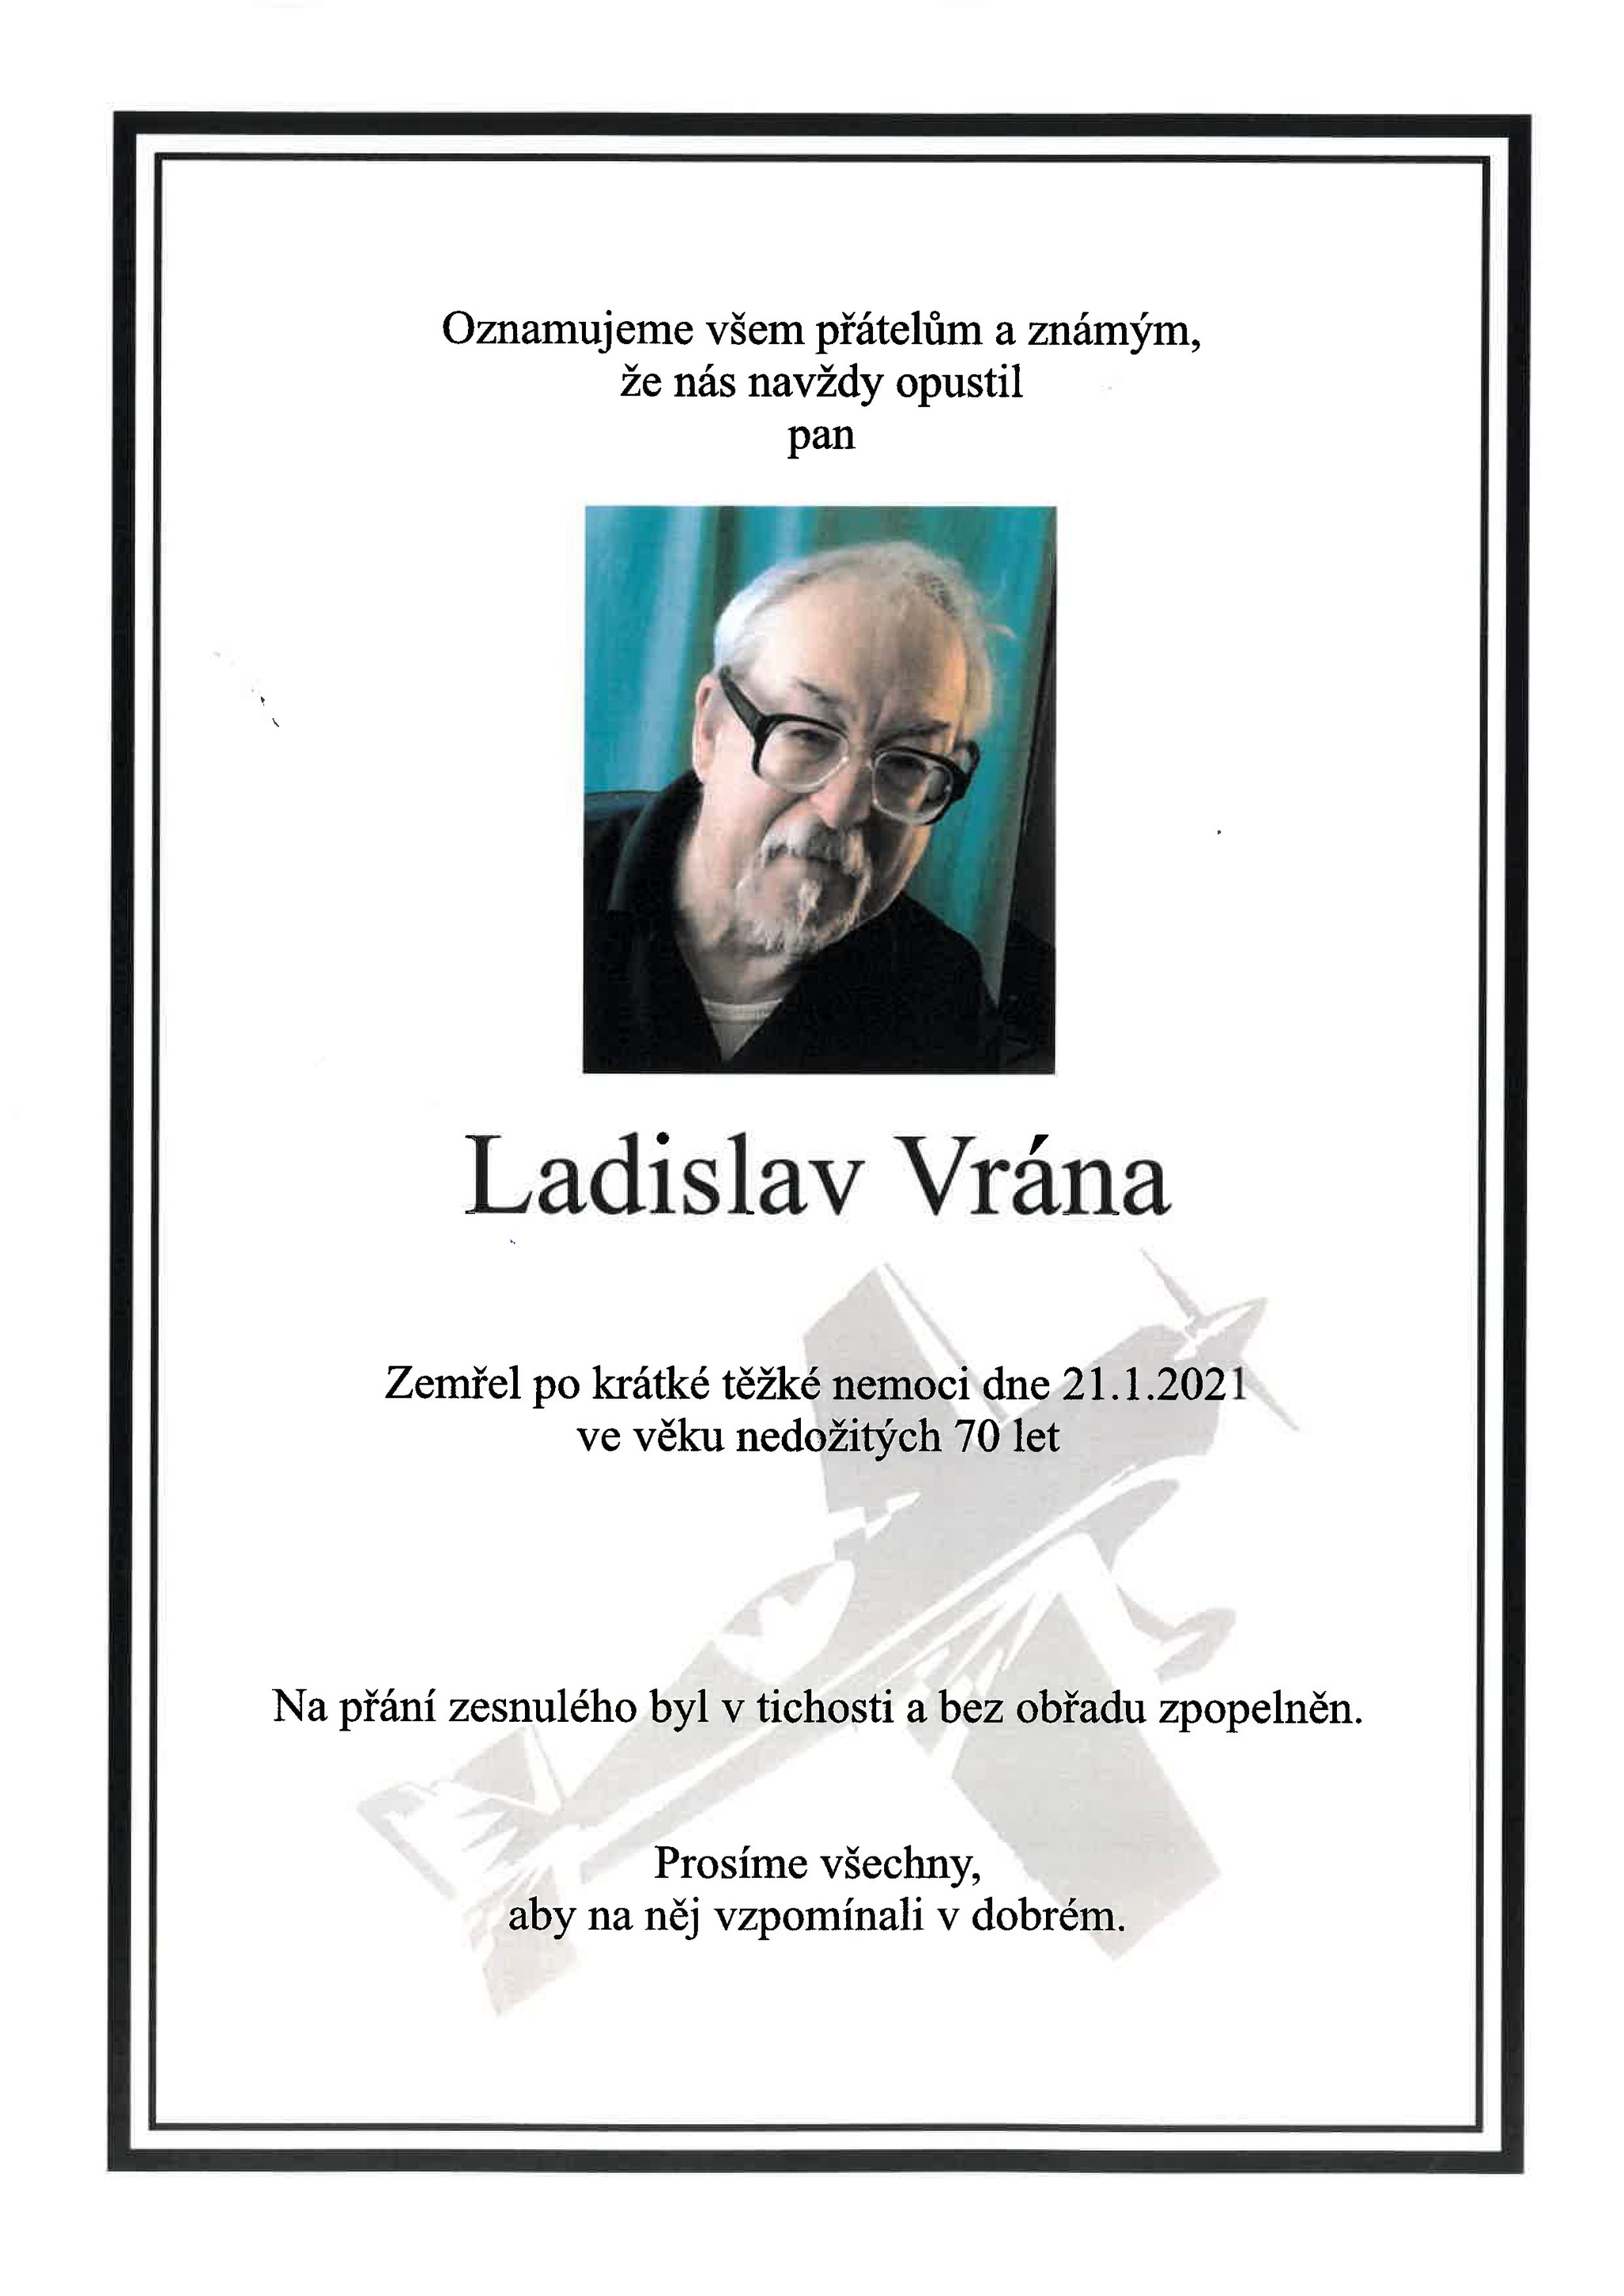 Ladislav Vrána